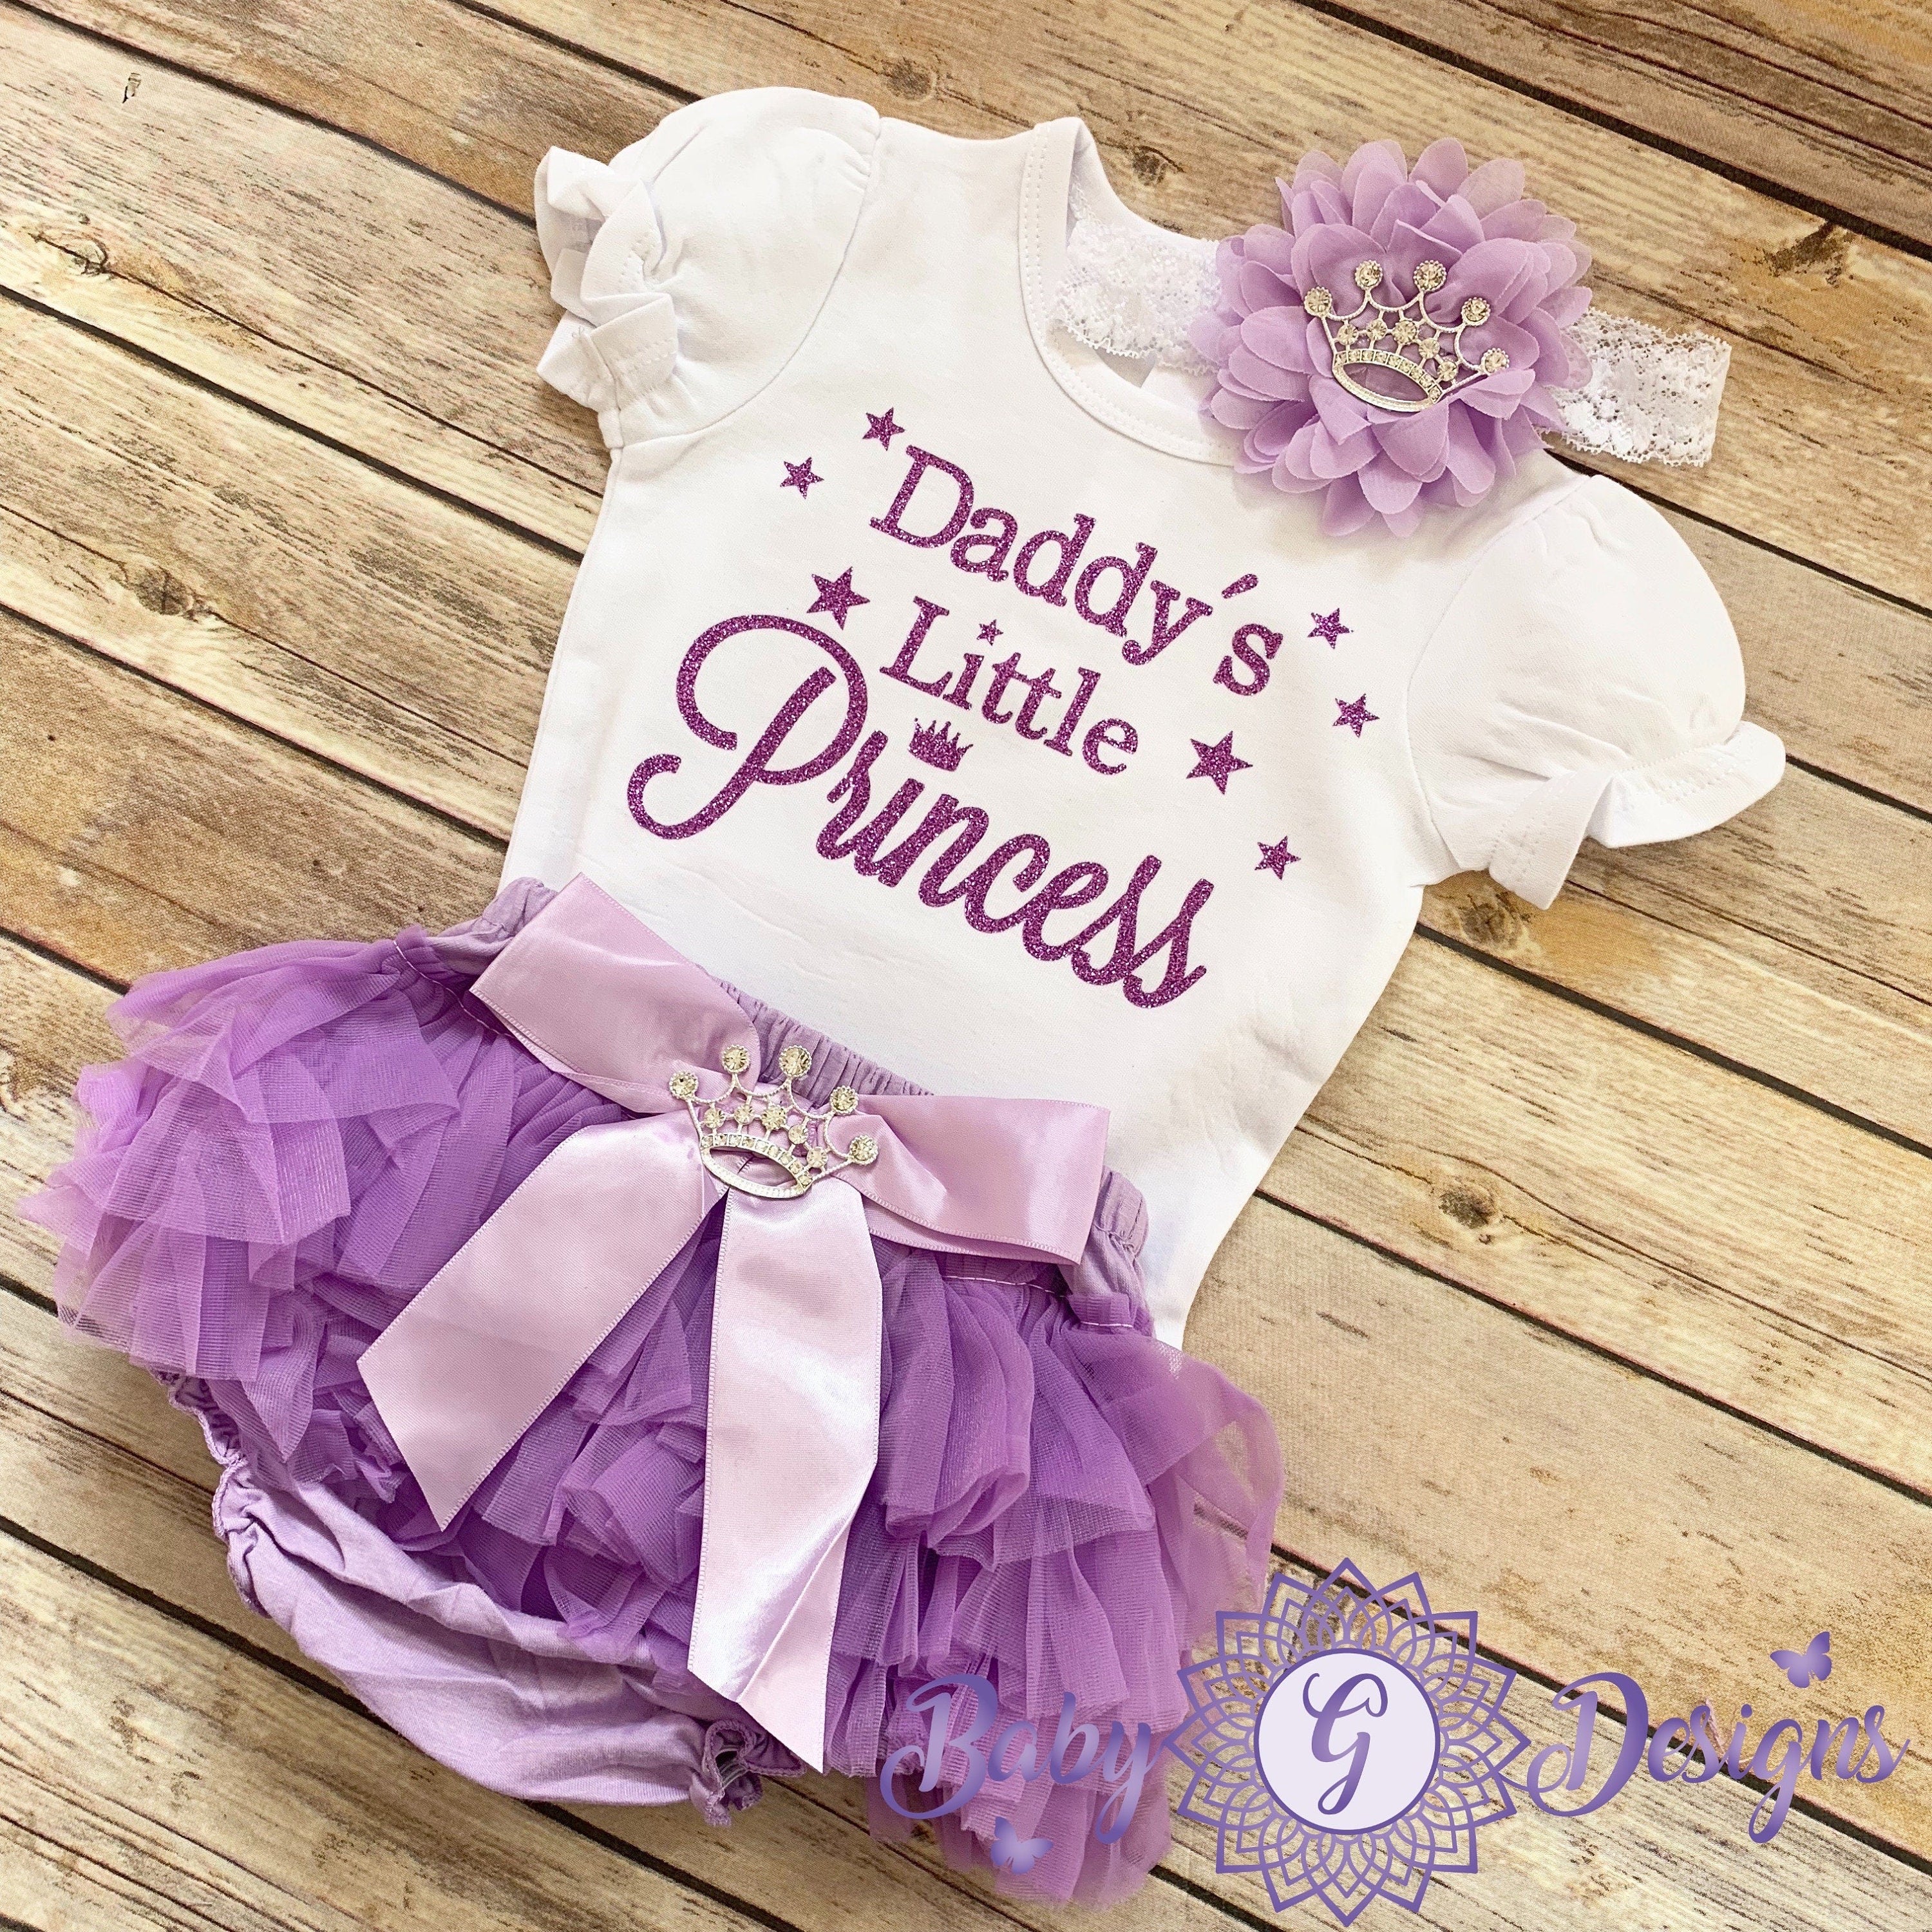 Daddys little princess- lavender